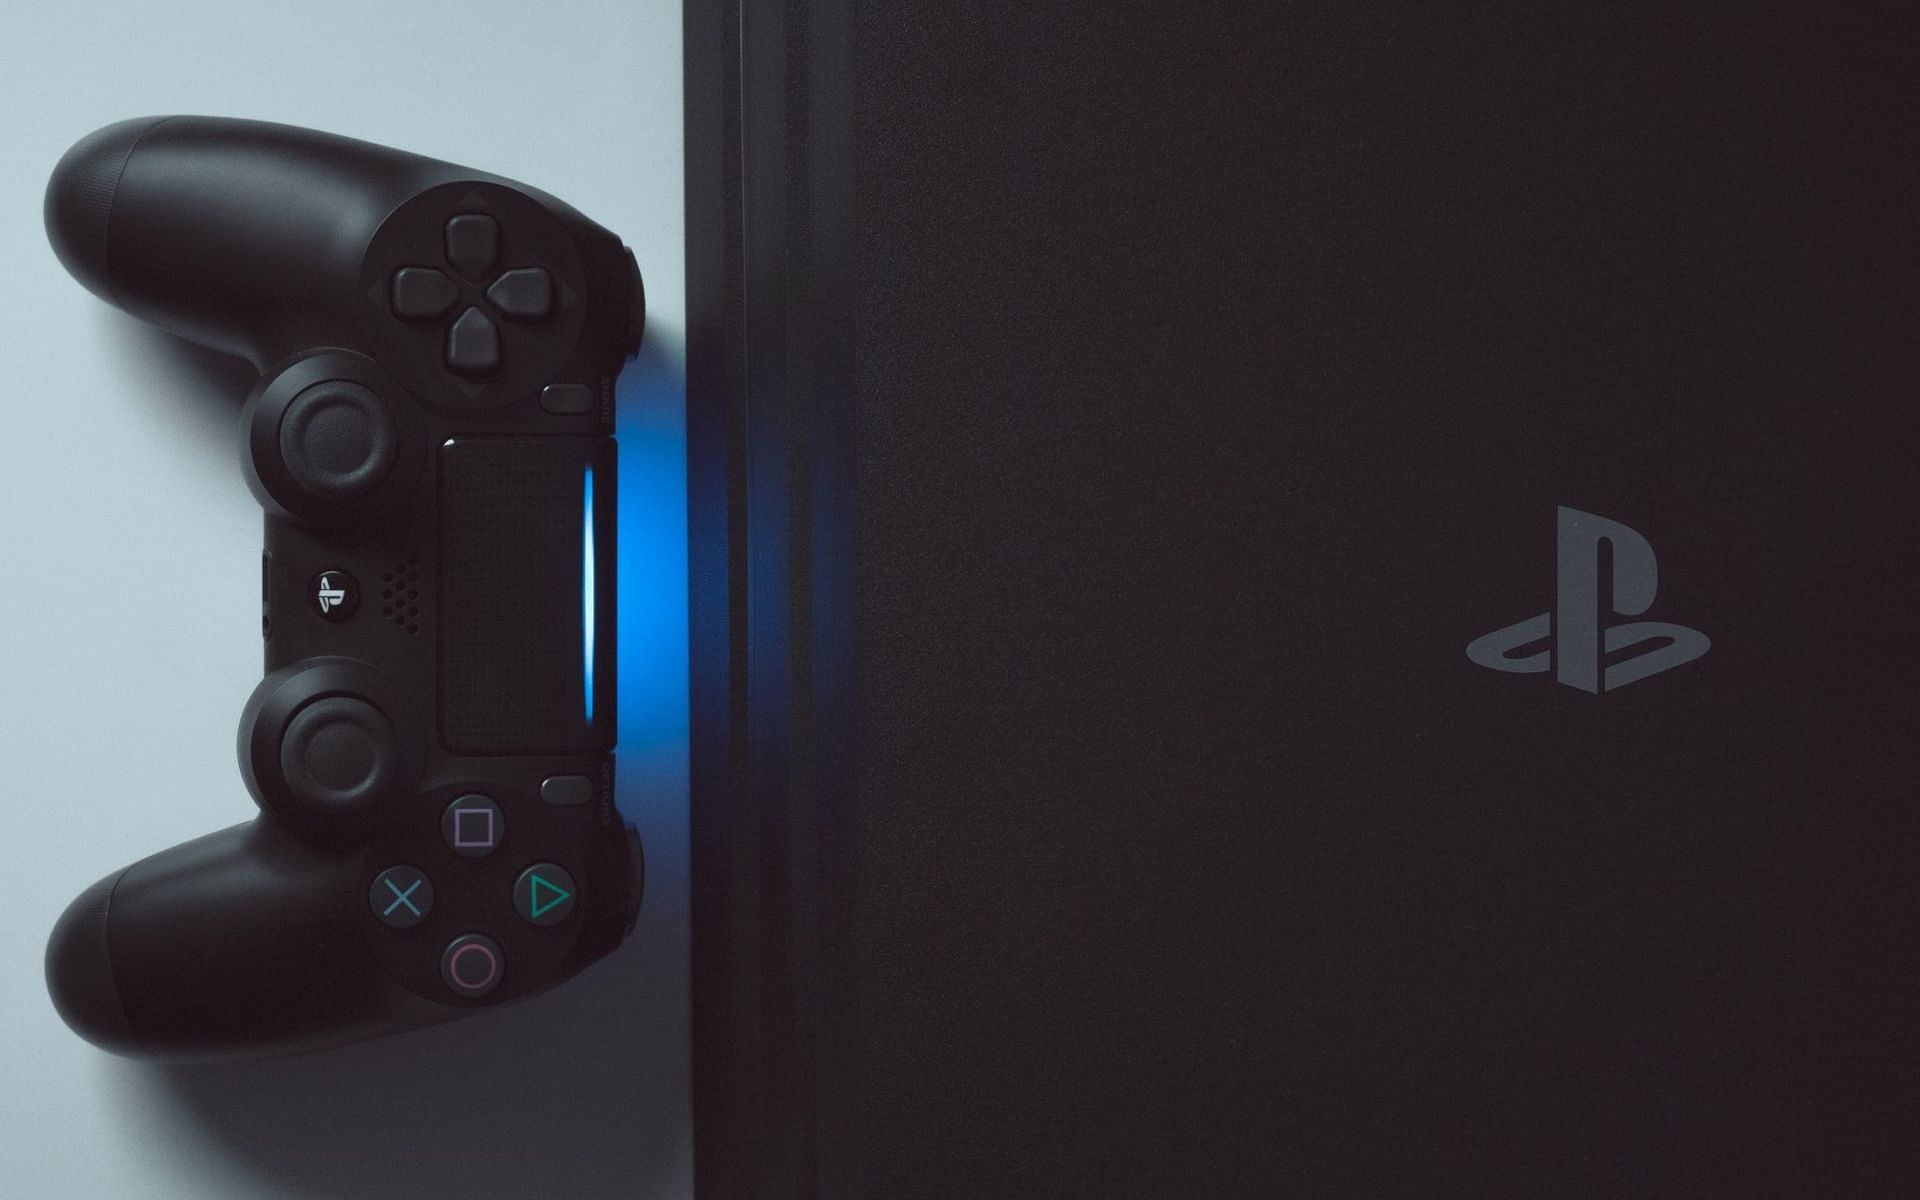 A PS4 pro with a Dualshock 4 controller (Image via unsplash.com)